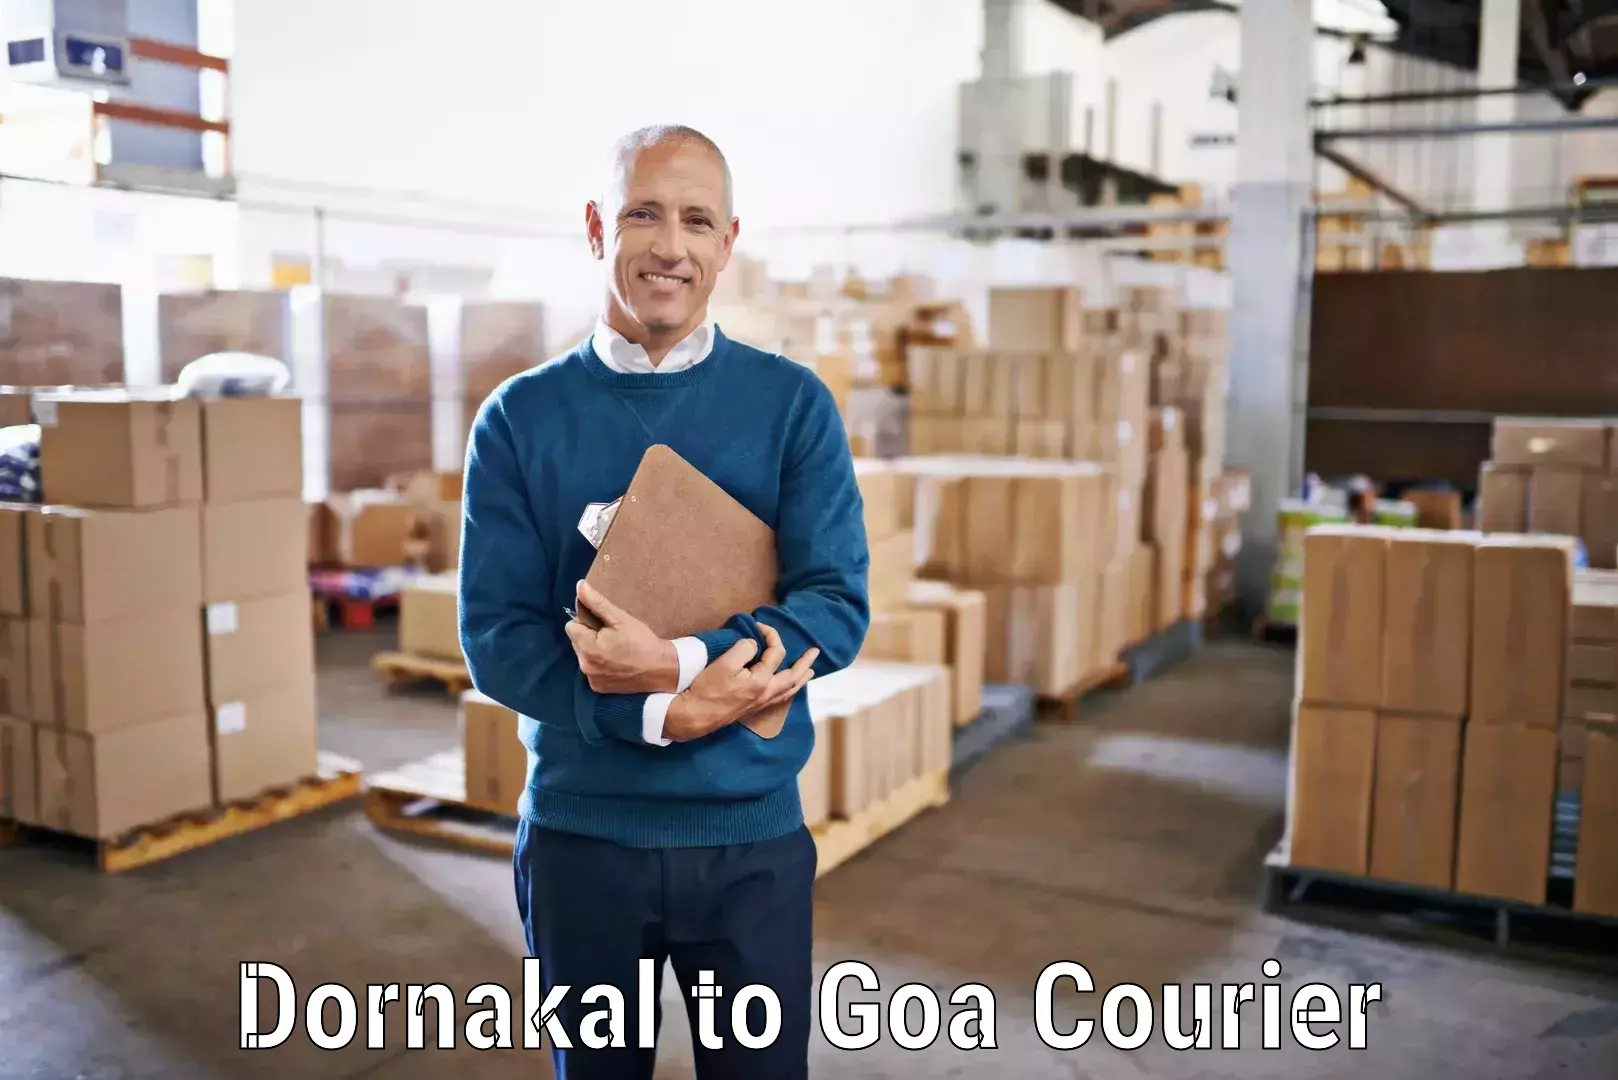 Courier service comparison in Dornakal to Bicholim